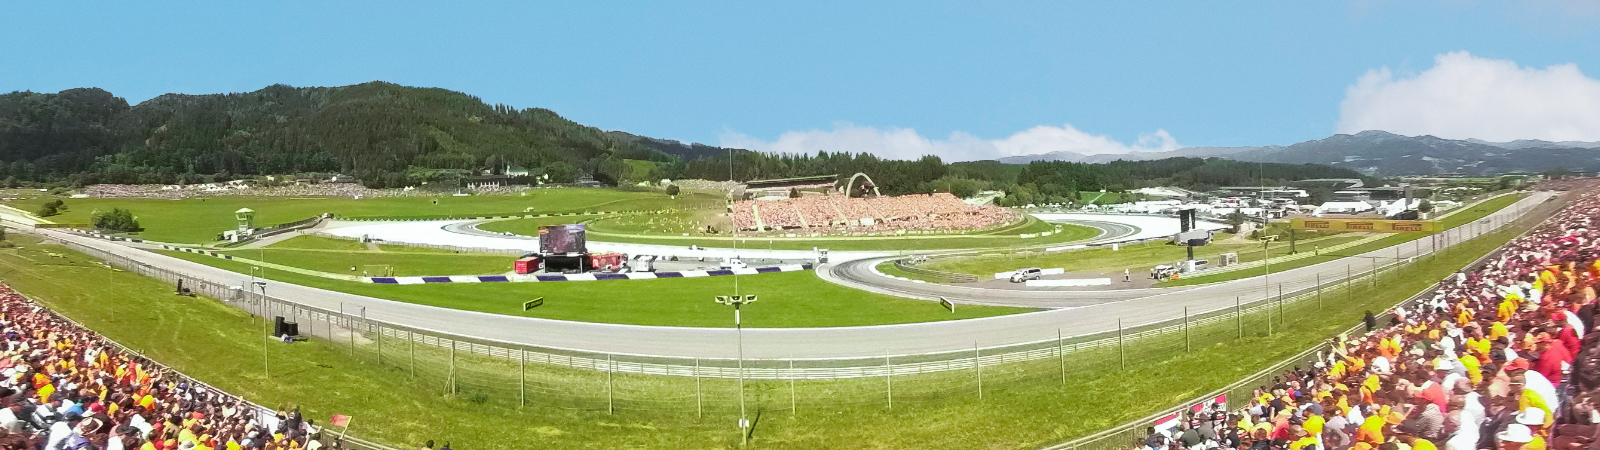 Vstupenka 3 Corner Start-Ziel | F1 Rakousko 2023 | Red Bull Ring | Spielberg | Oficilání vstupenky | www.F1austria.com